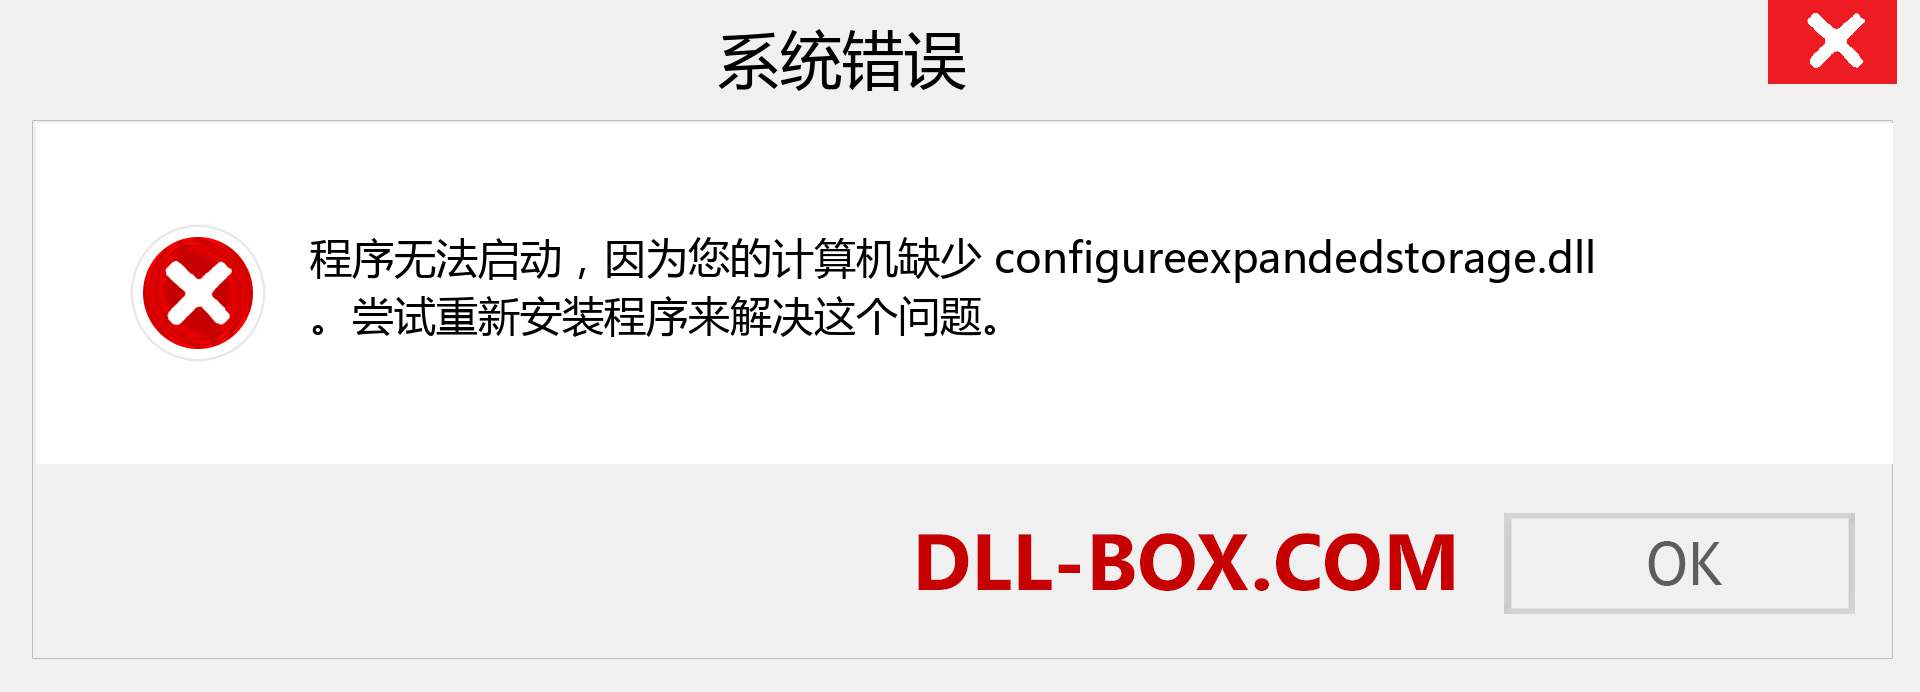 configureexpandedstorage.dll 文件丢失？。 适用于 Windows 7、8、10 的下载 - 修复 Windows、照片、图像上的 configureexpandedstorage dll 丢失错误